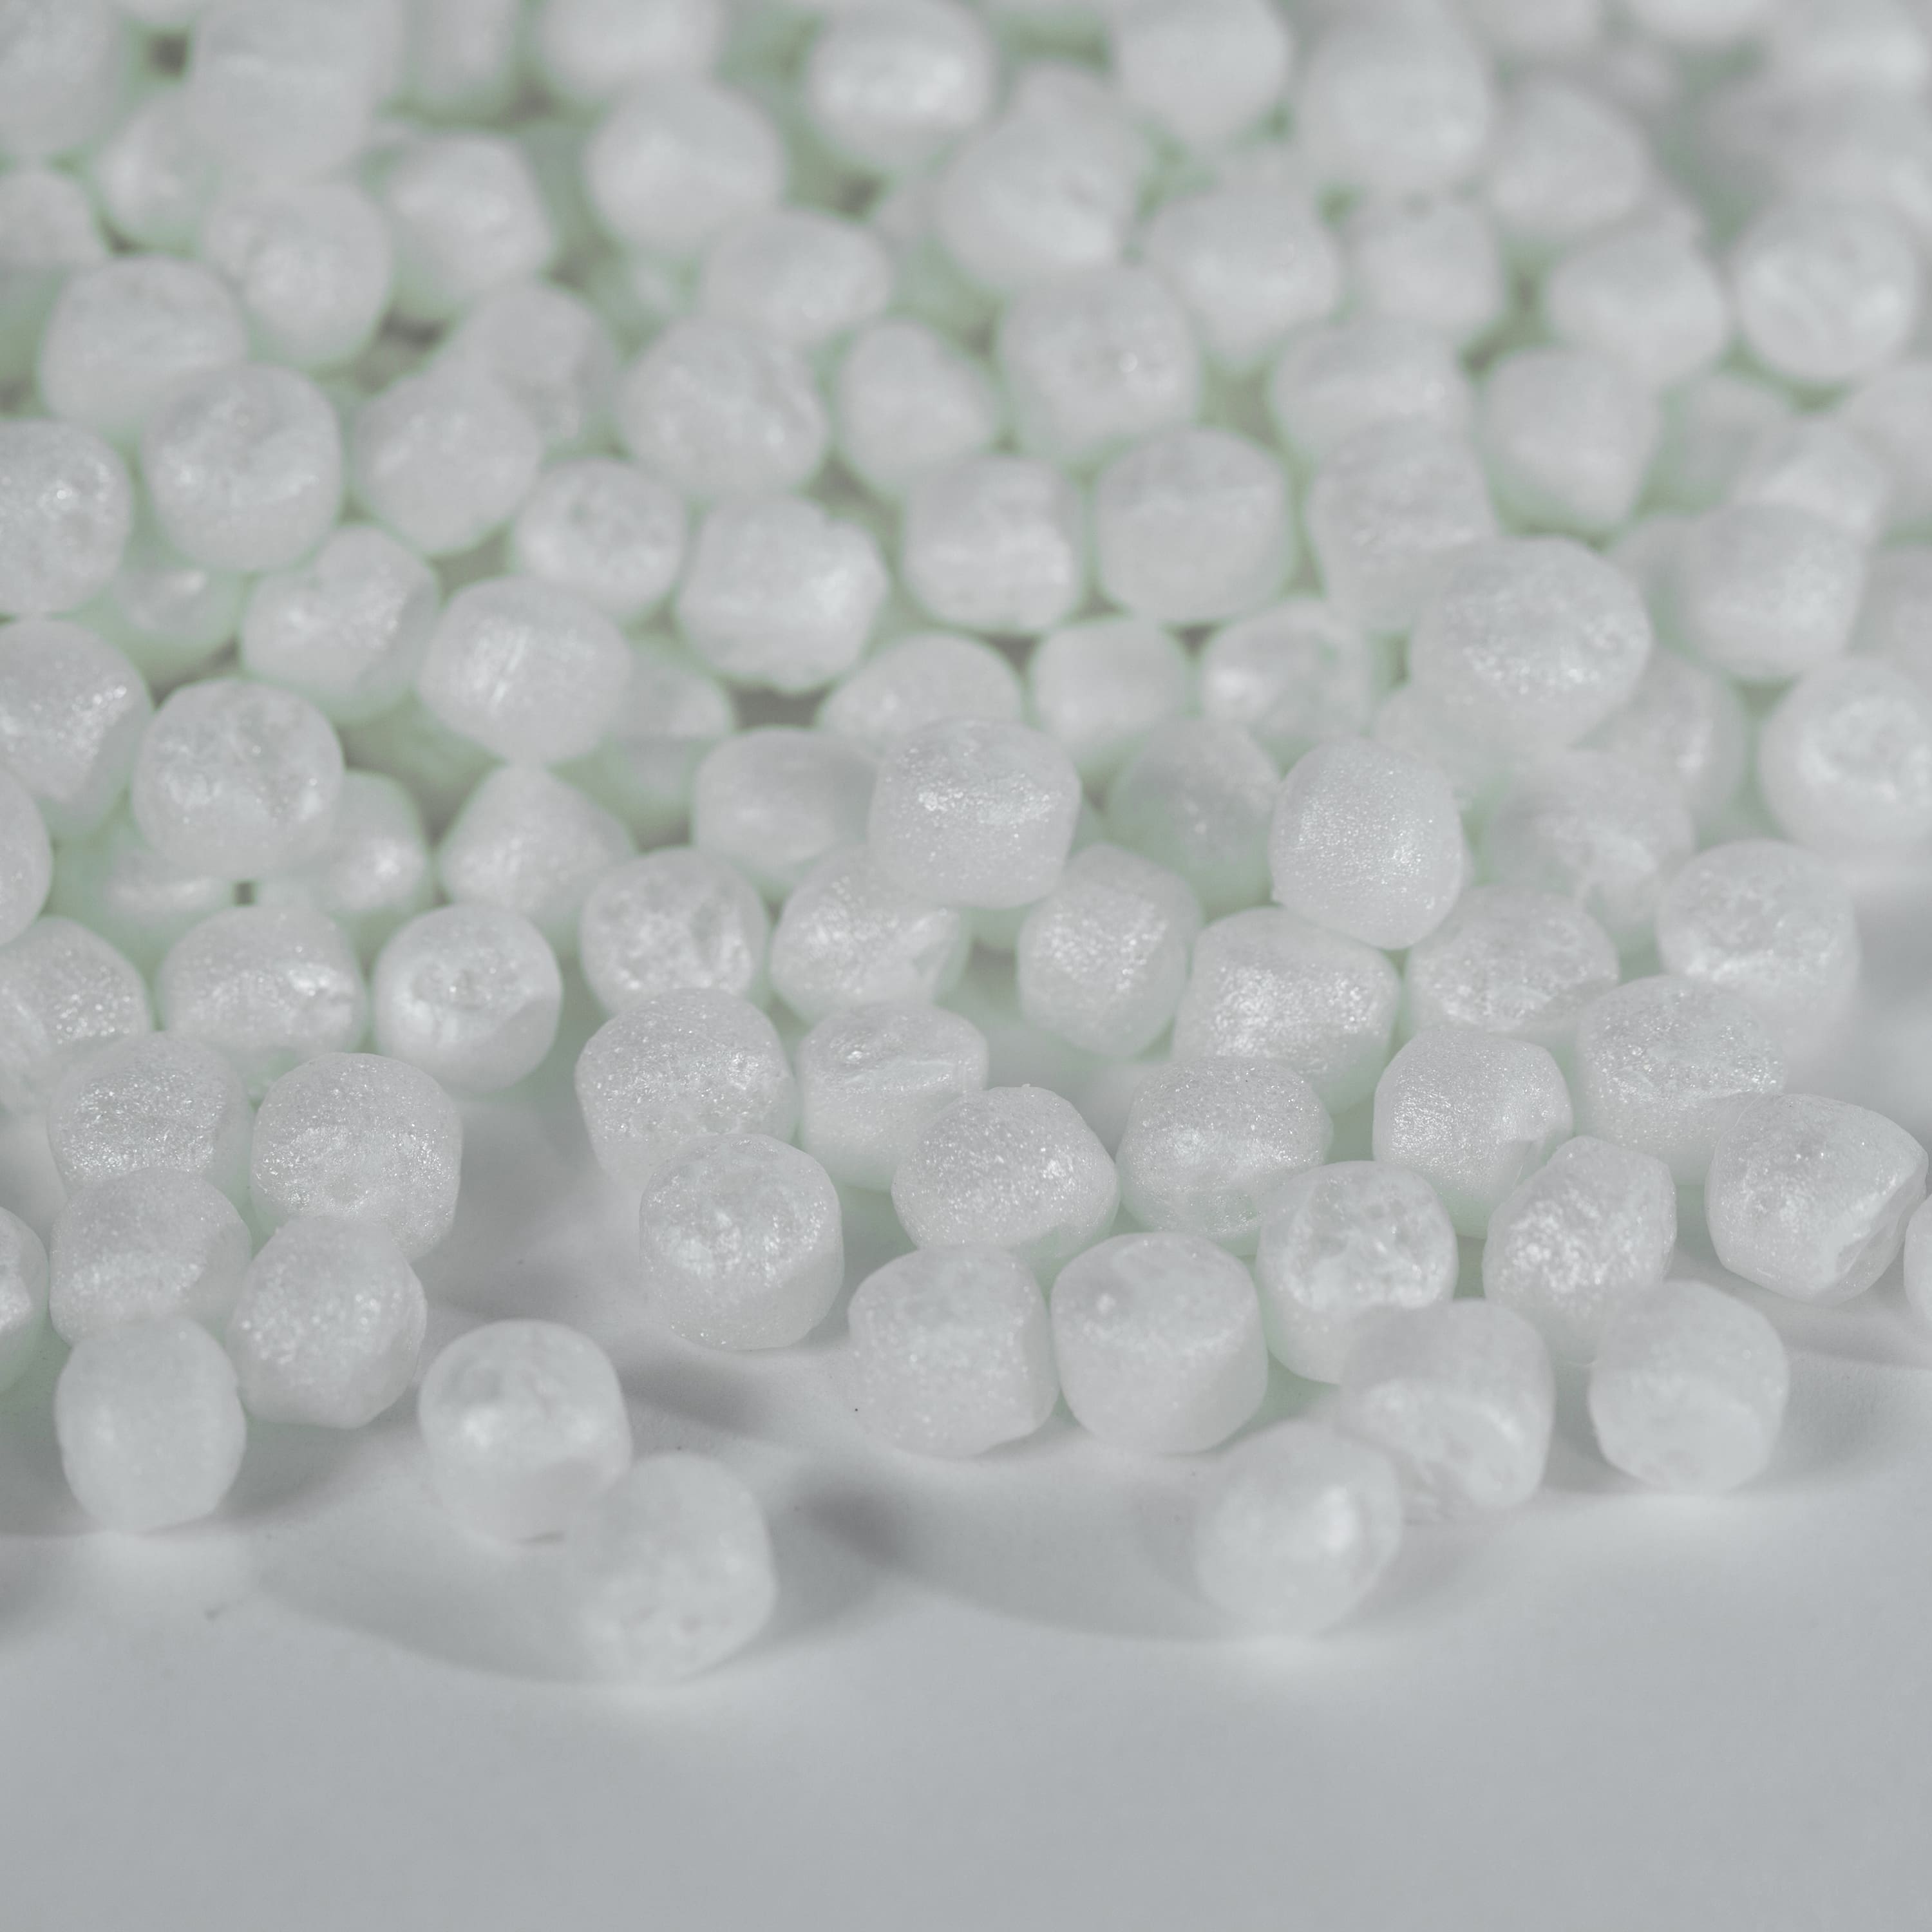  Cabilock 10pcs Polystyrene Beads for Bean Bags Foam